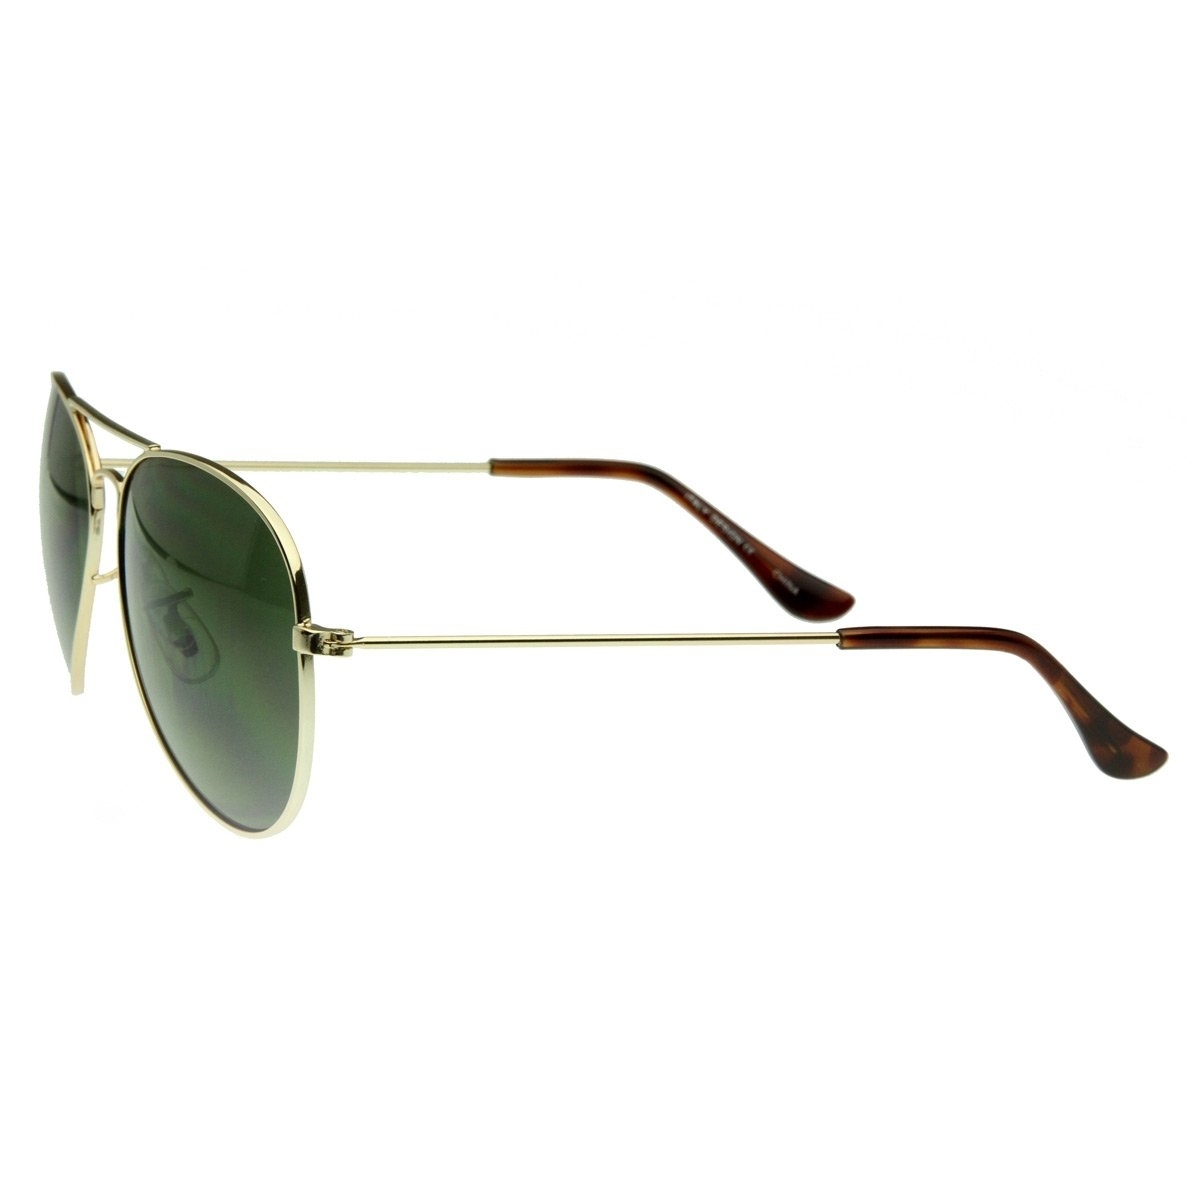 Original Classic Metal Standard Aviator Sunglasses - Nickel Plated Frame - Gold Ice